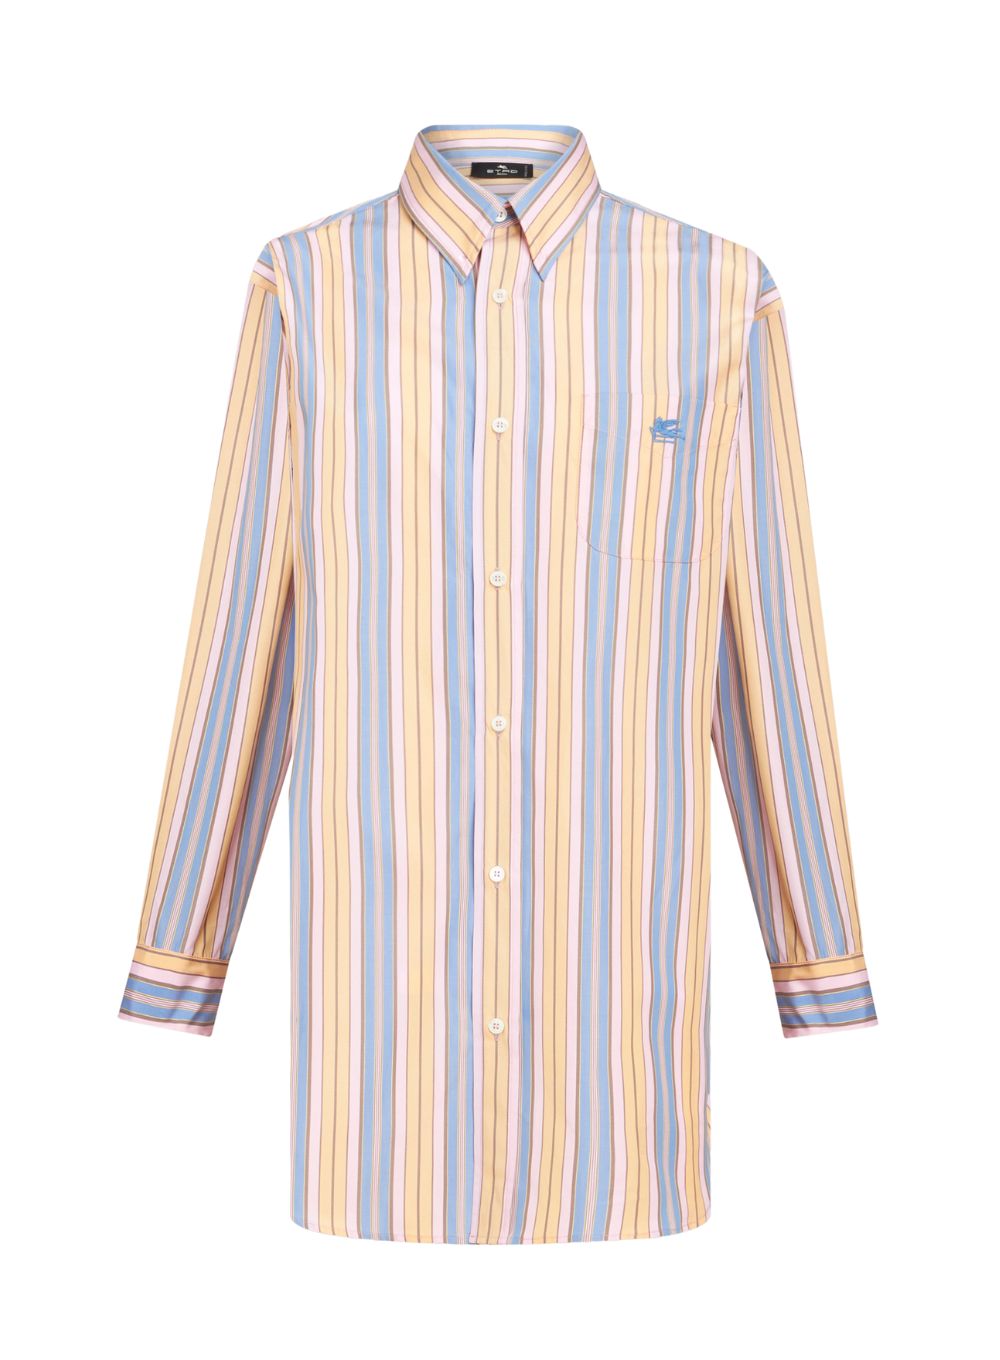 ETRO | Striped Button-Up Shirt